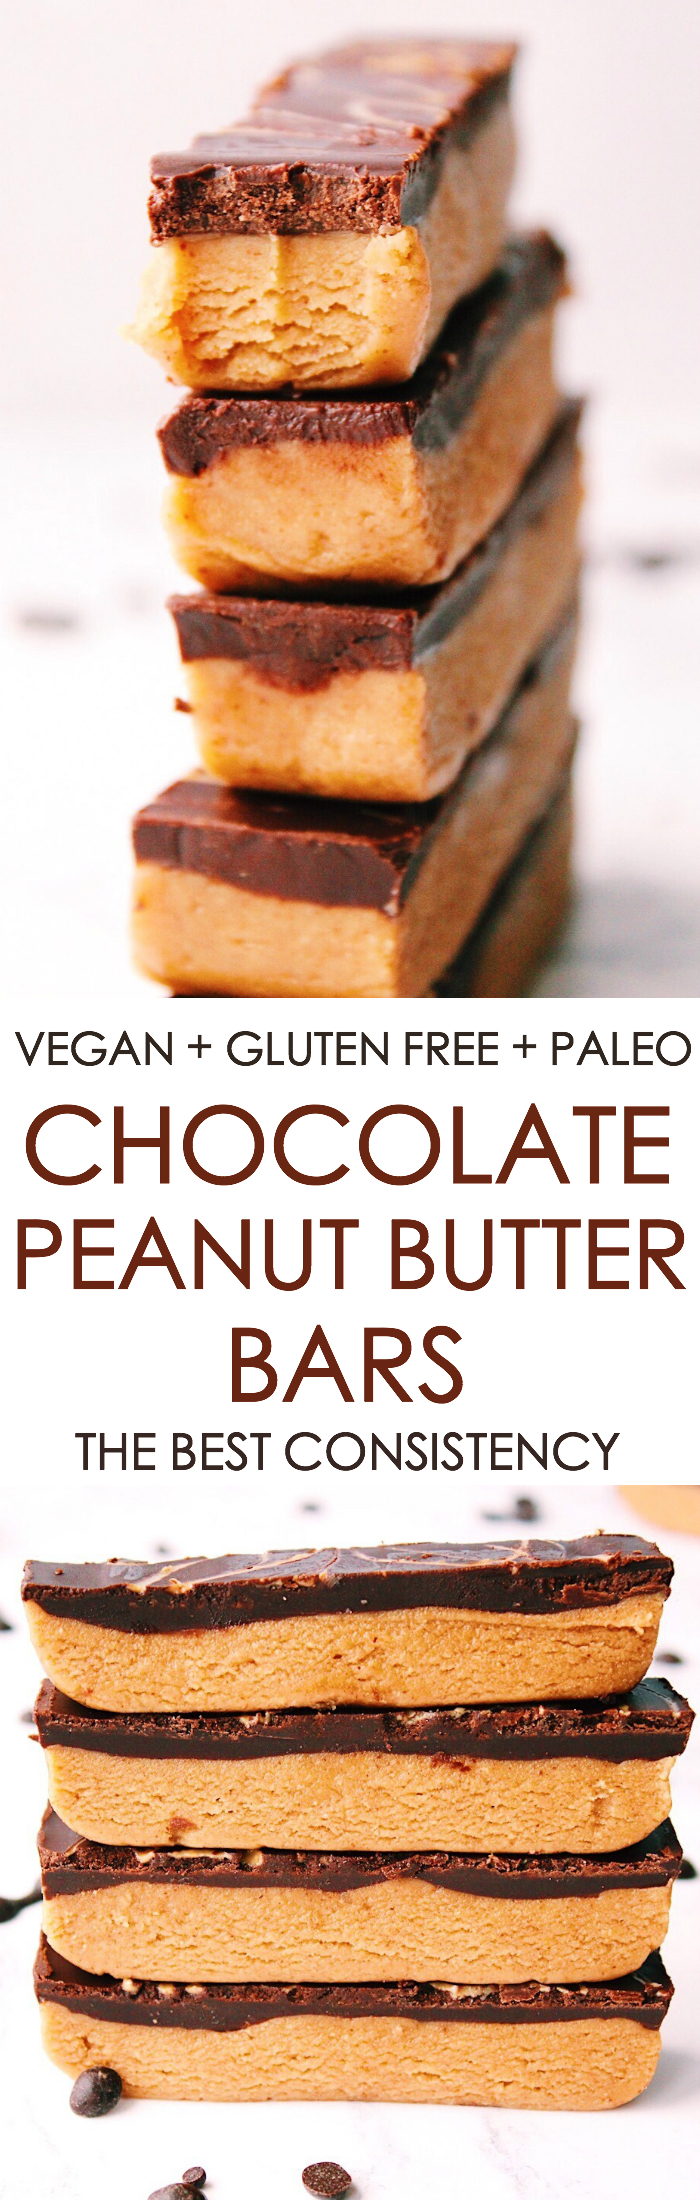 Chocolate Peanut Butter Bars 